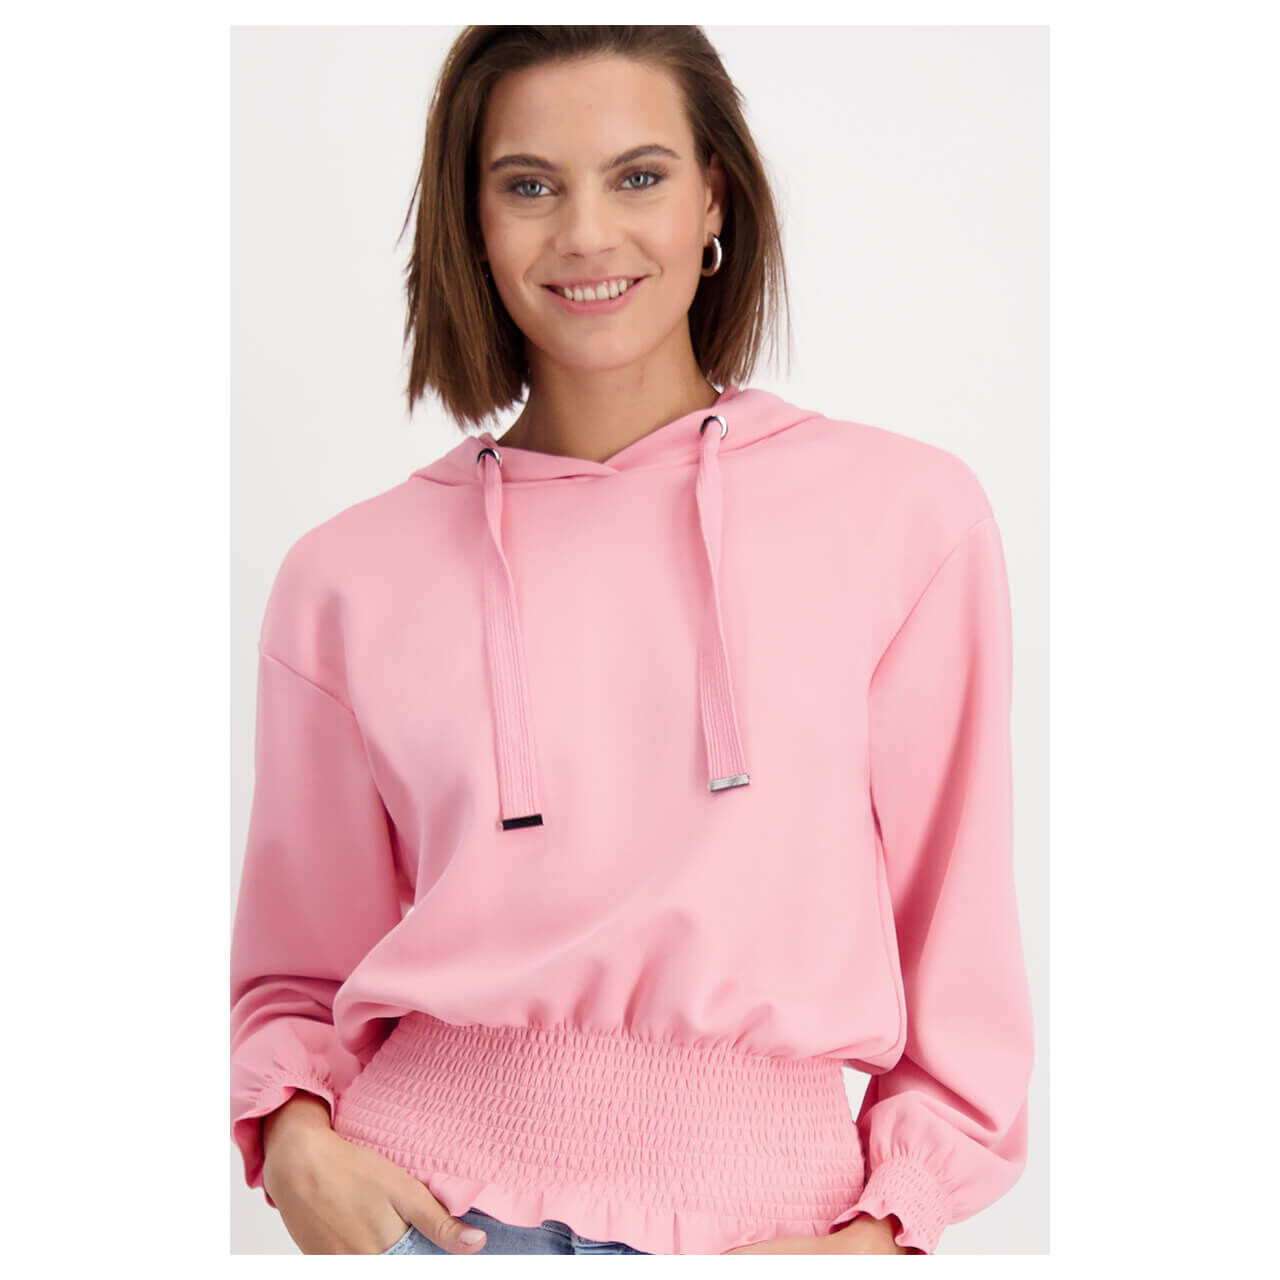 Monari Damen Hoodie Sweatshirt pink smoothie